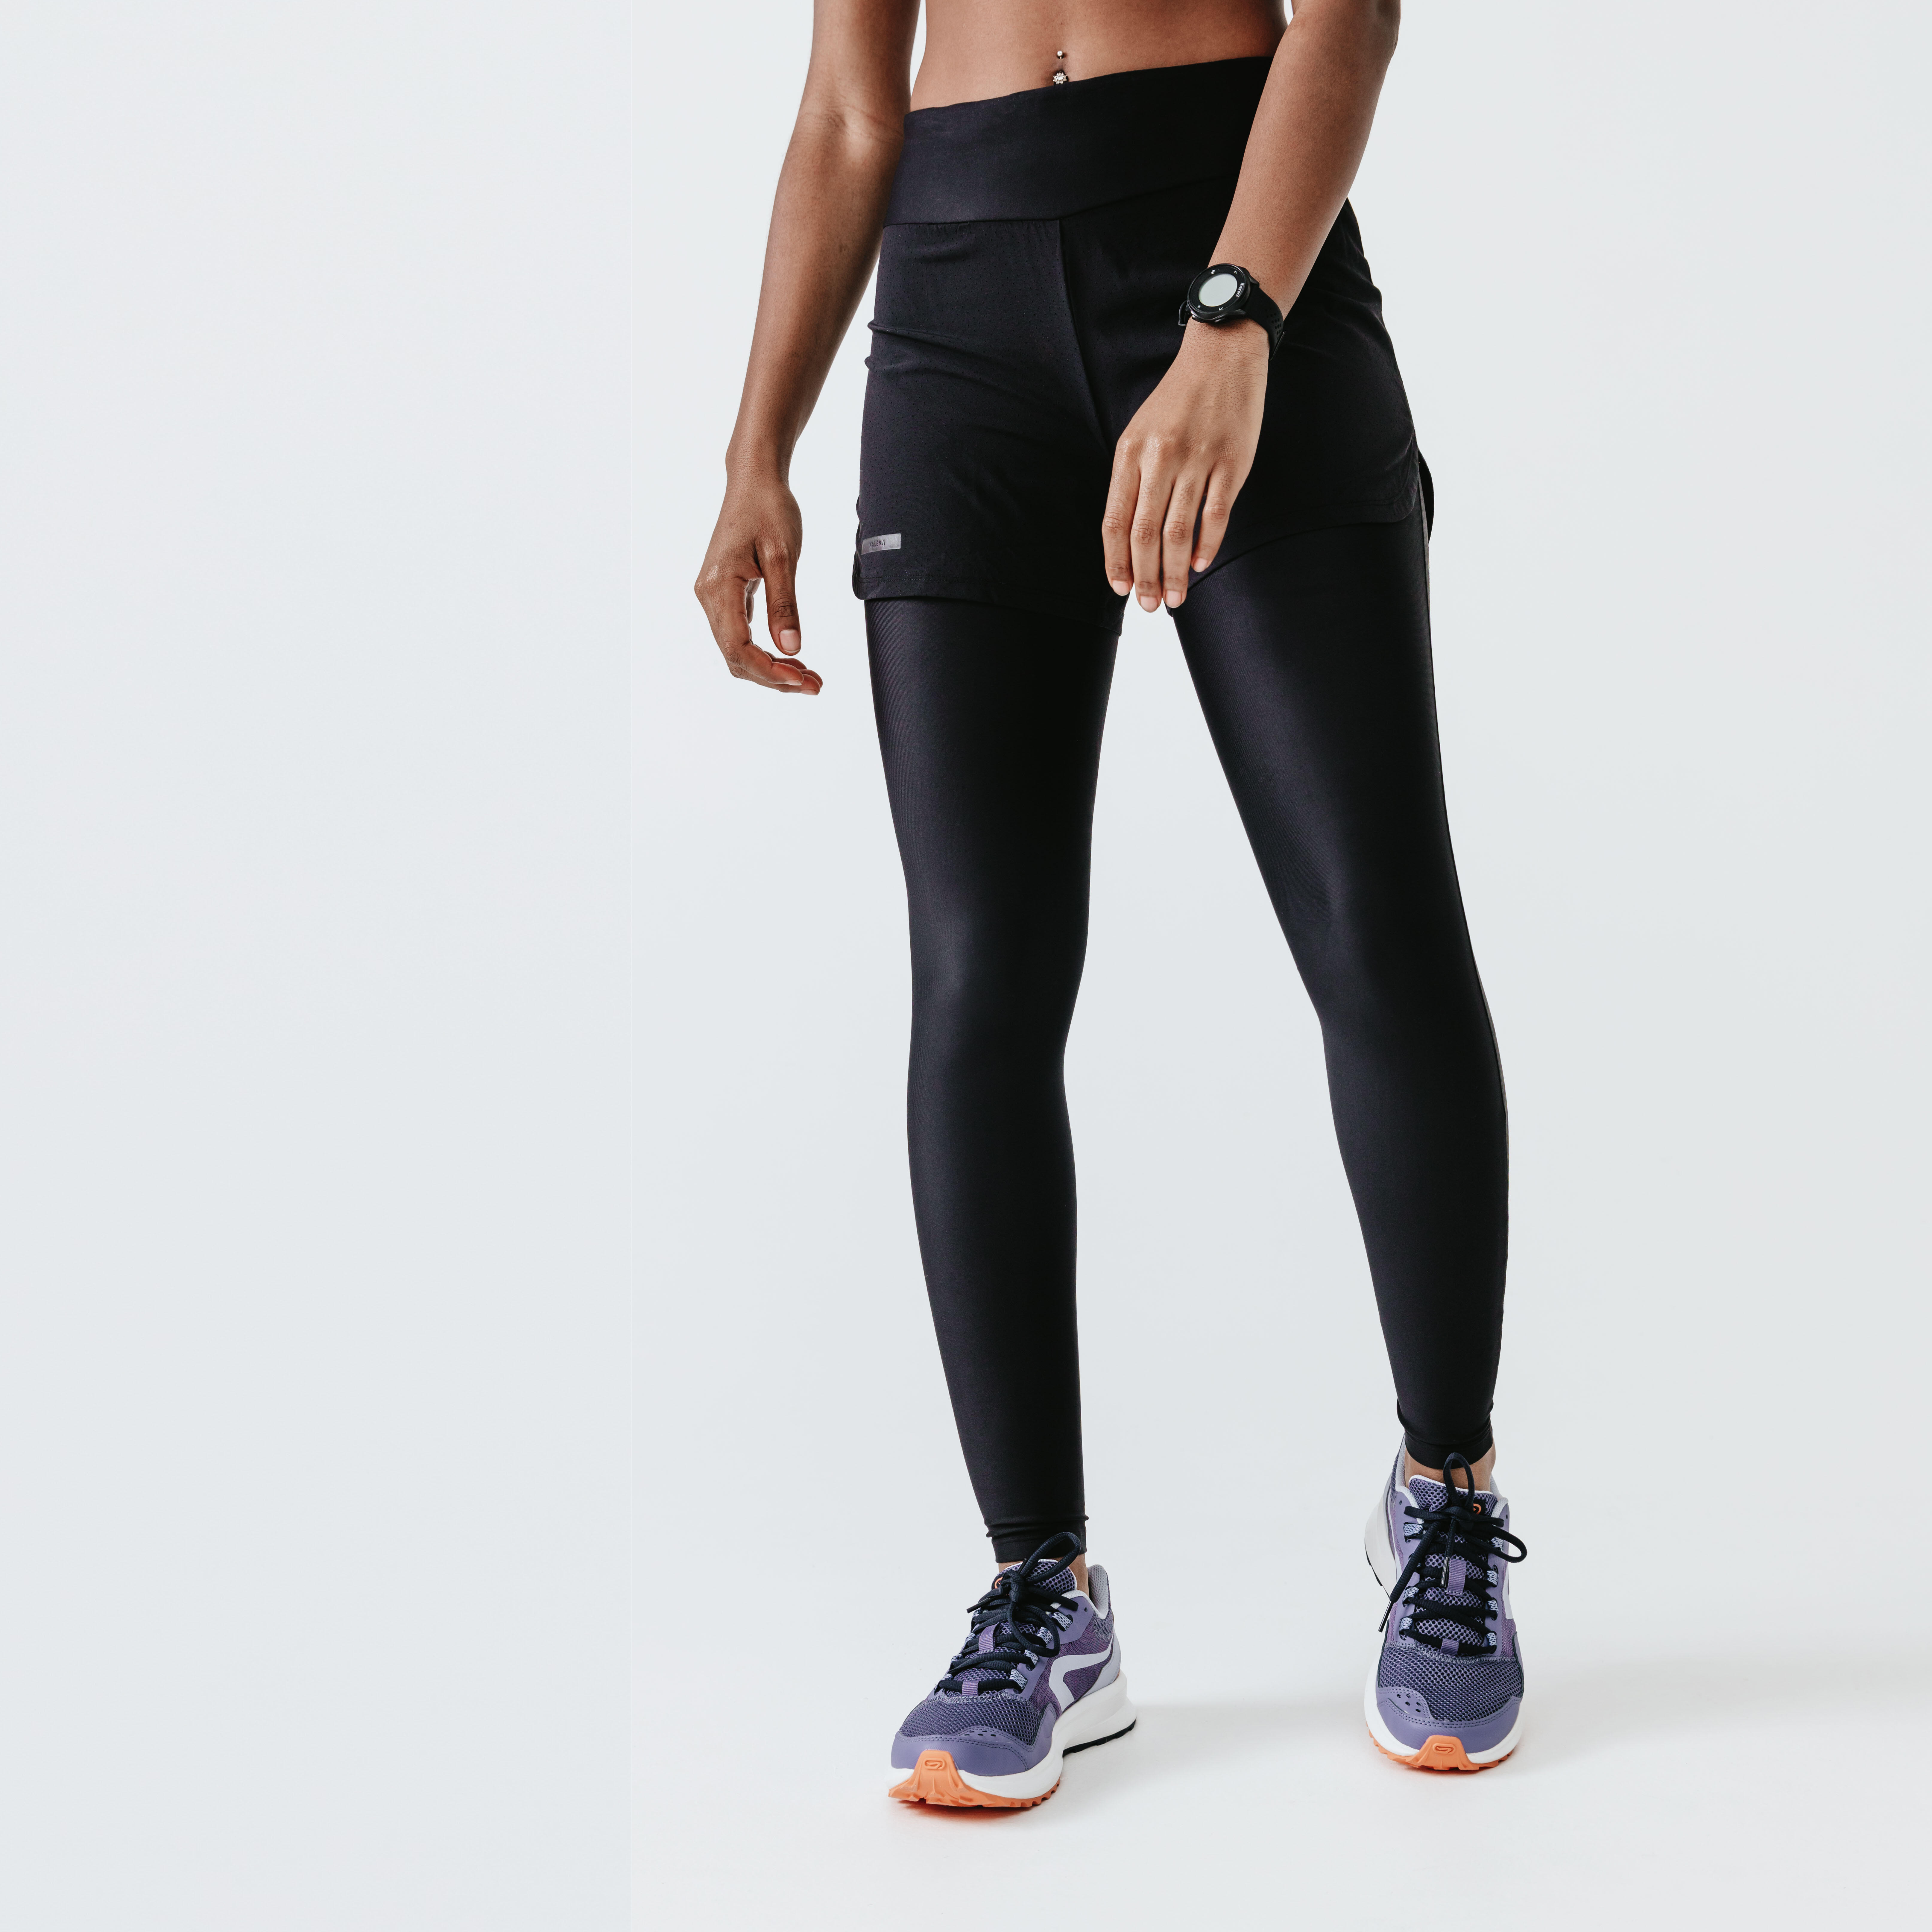 Women's Running Tights Run Dry - black - Decathlon